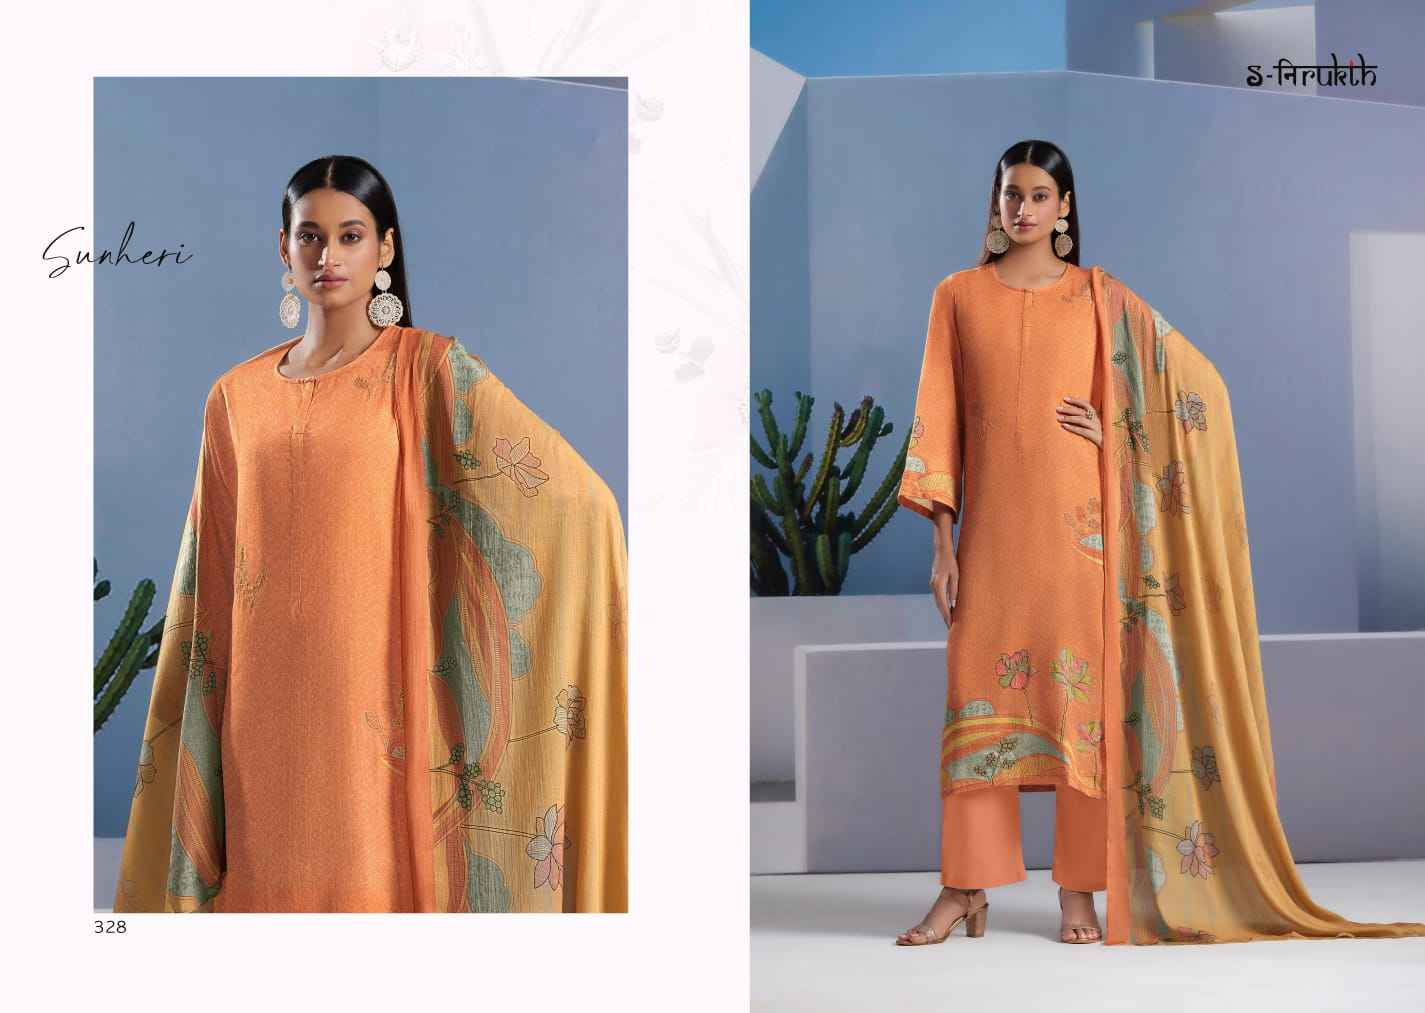 S Nirukth Sunheri Cotton Dress Material (8 pcs Catalogue)